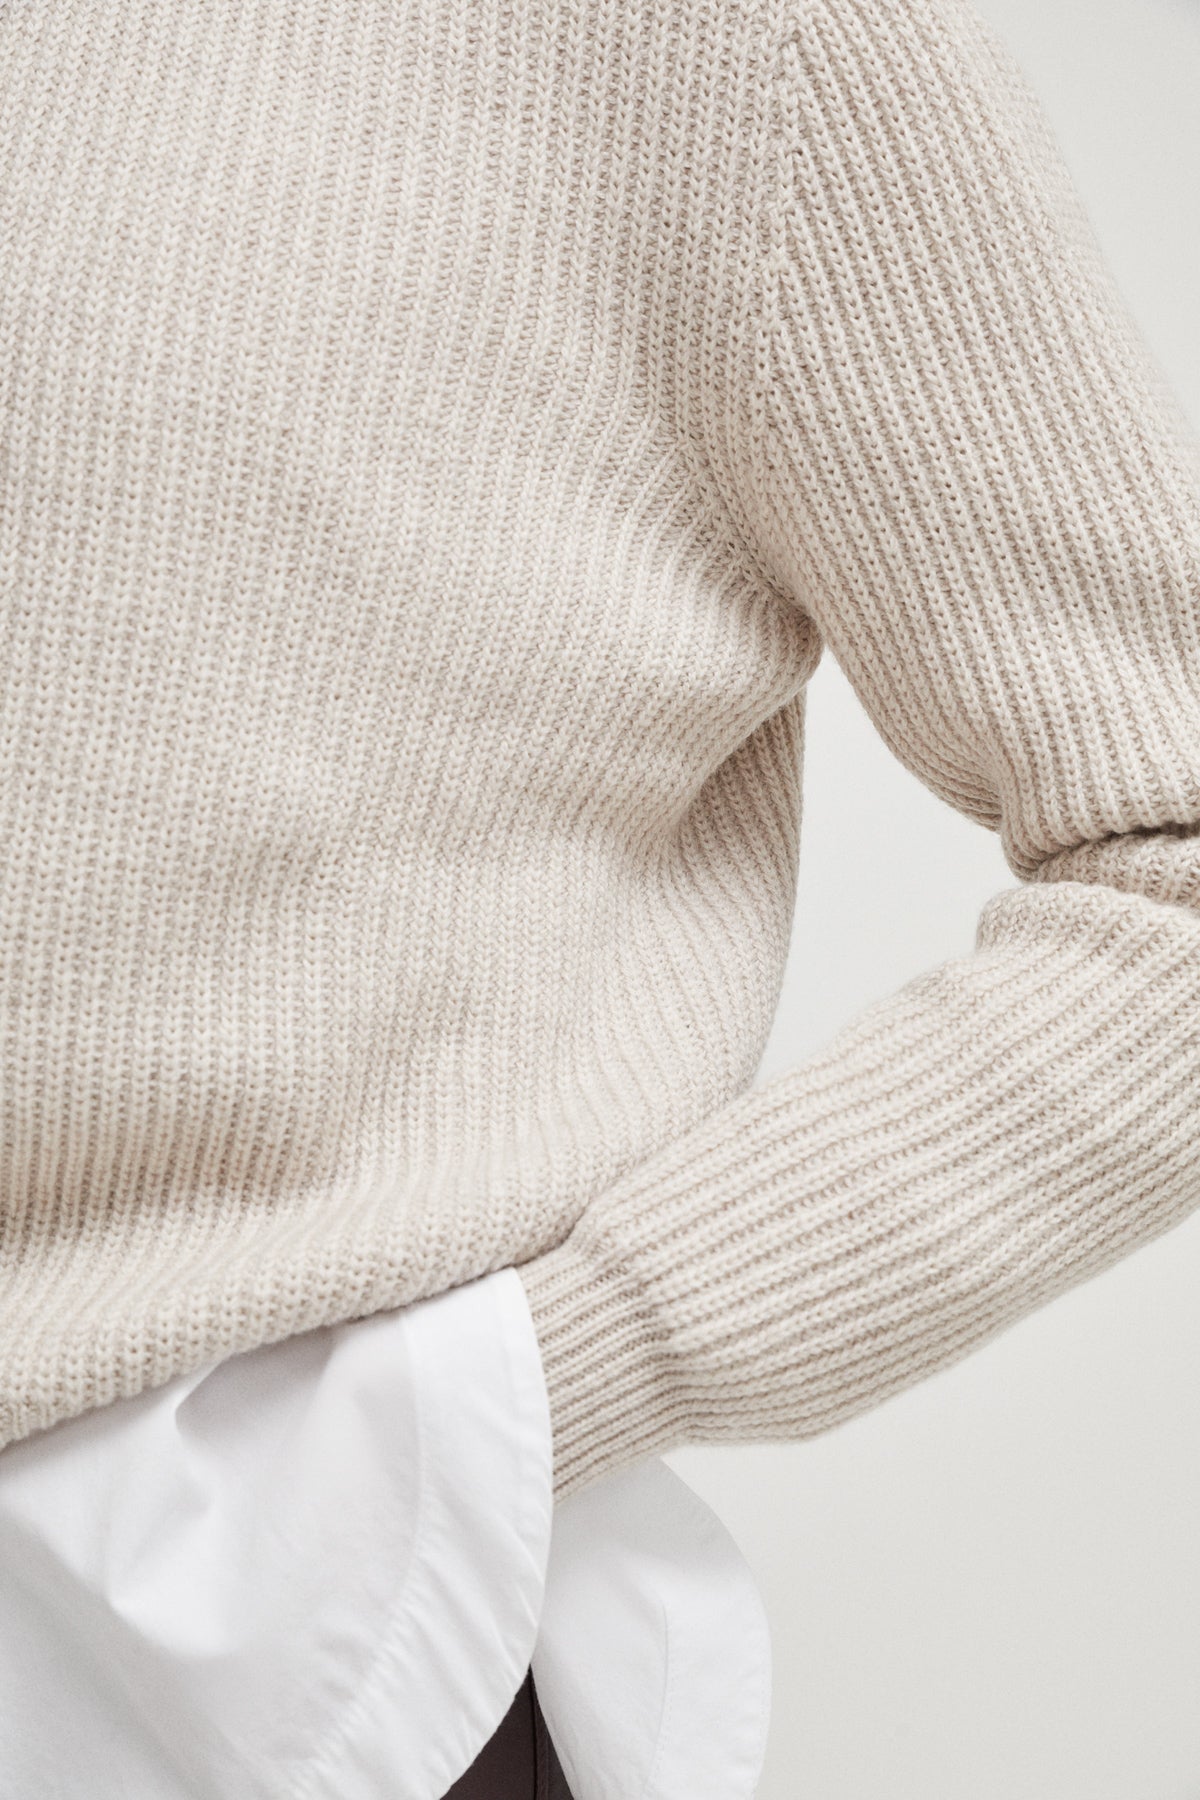 the wool perkins sweater greige